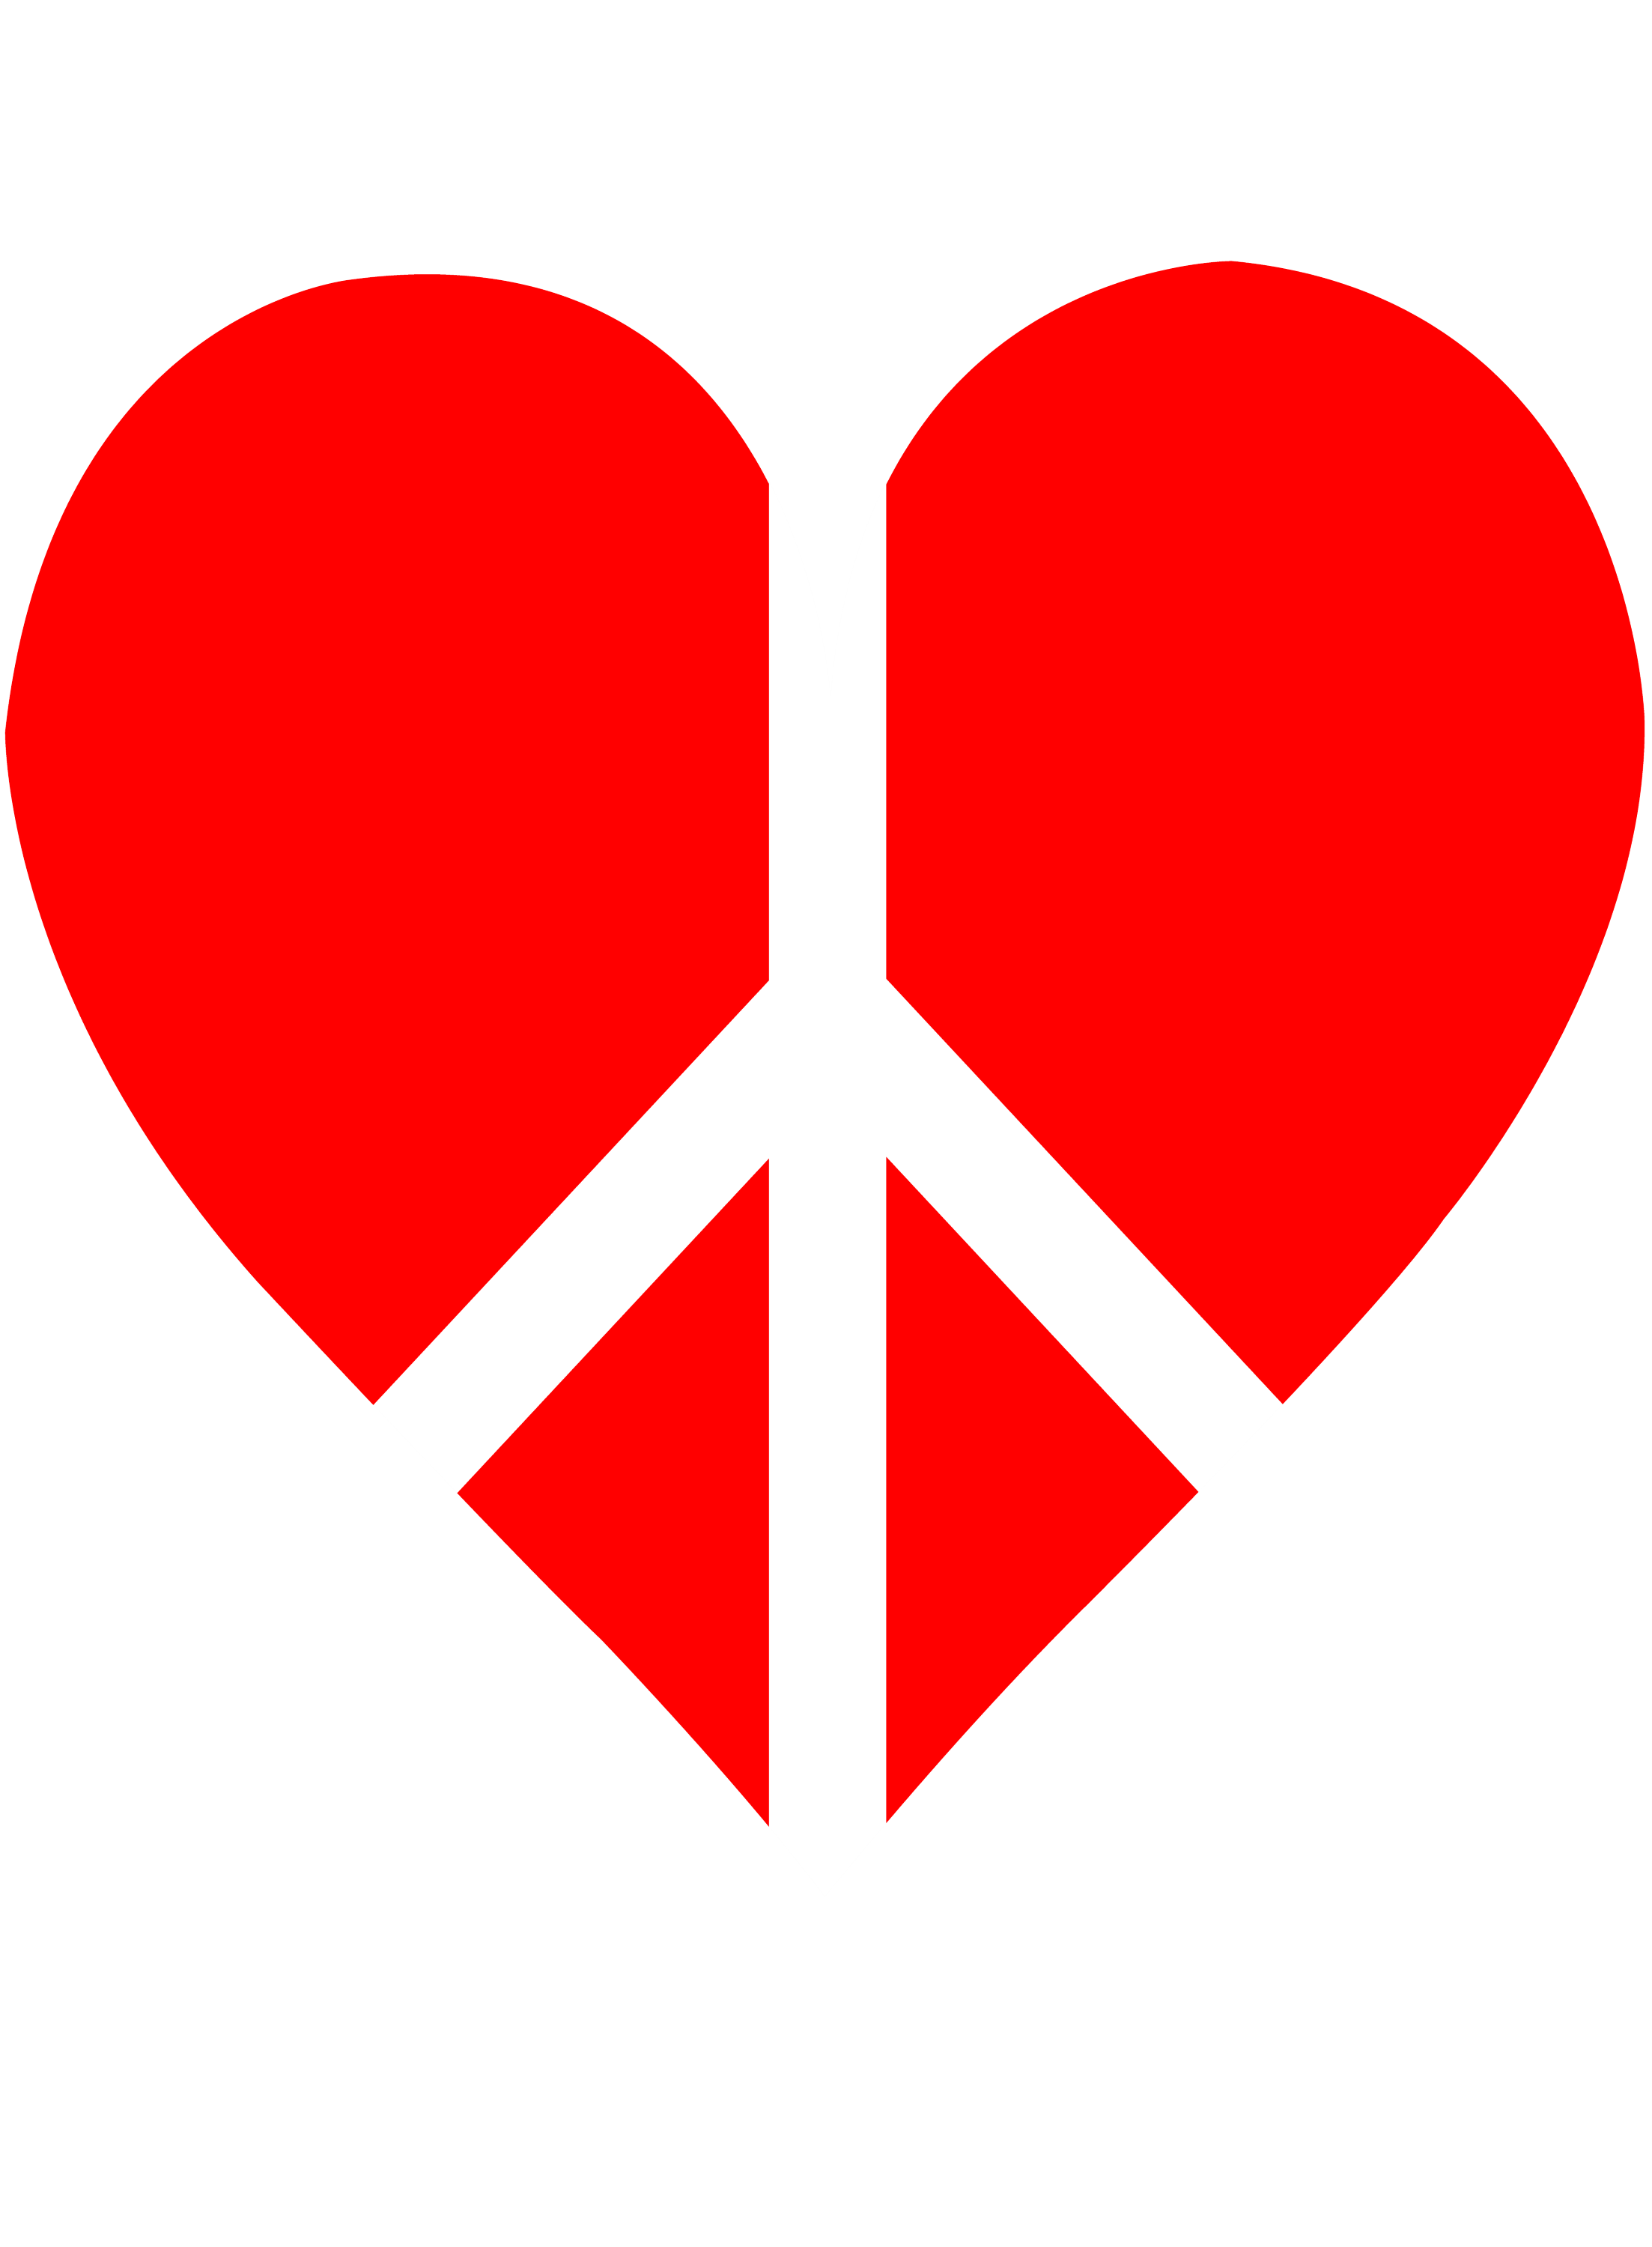 heart symbol free clip art - photo #13